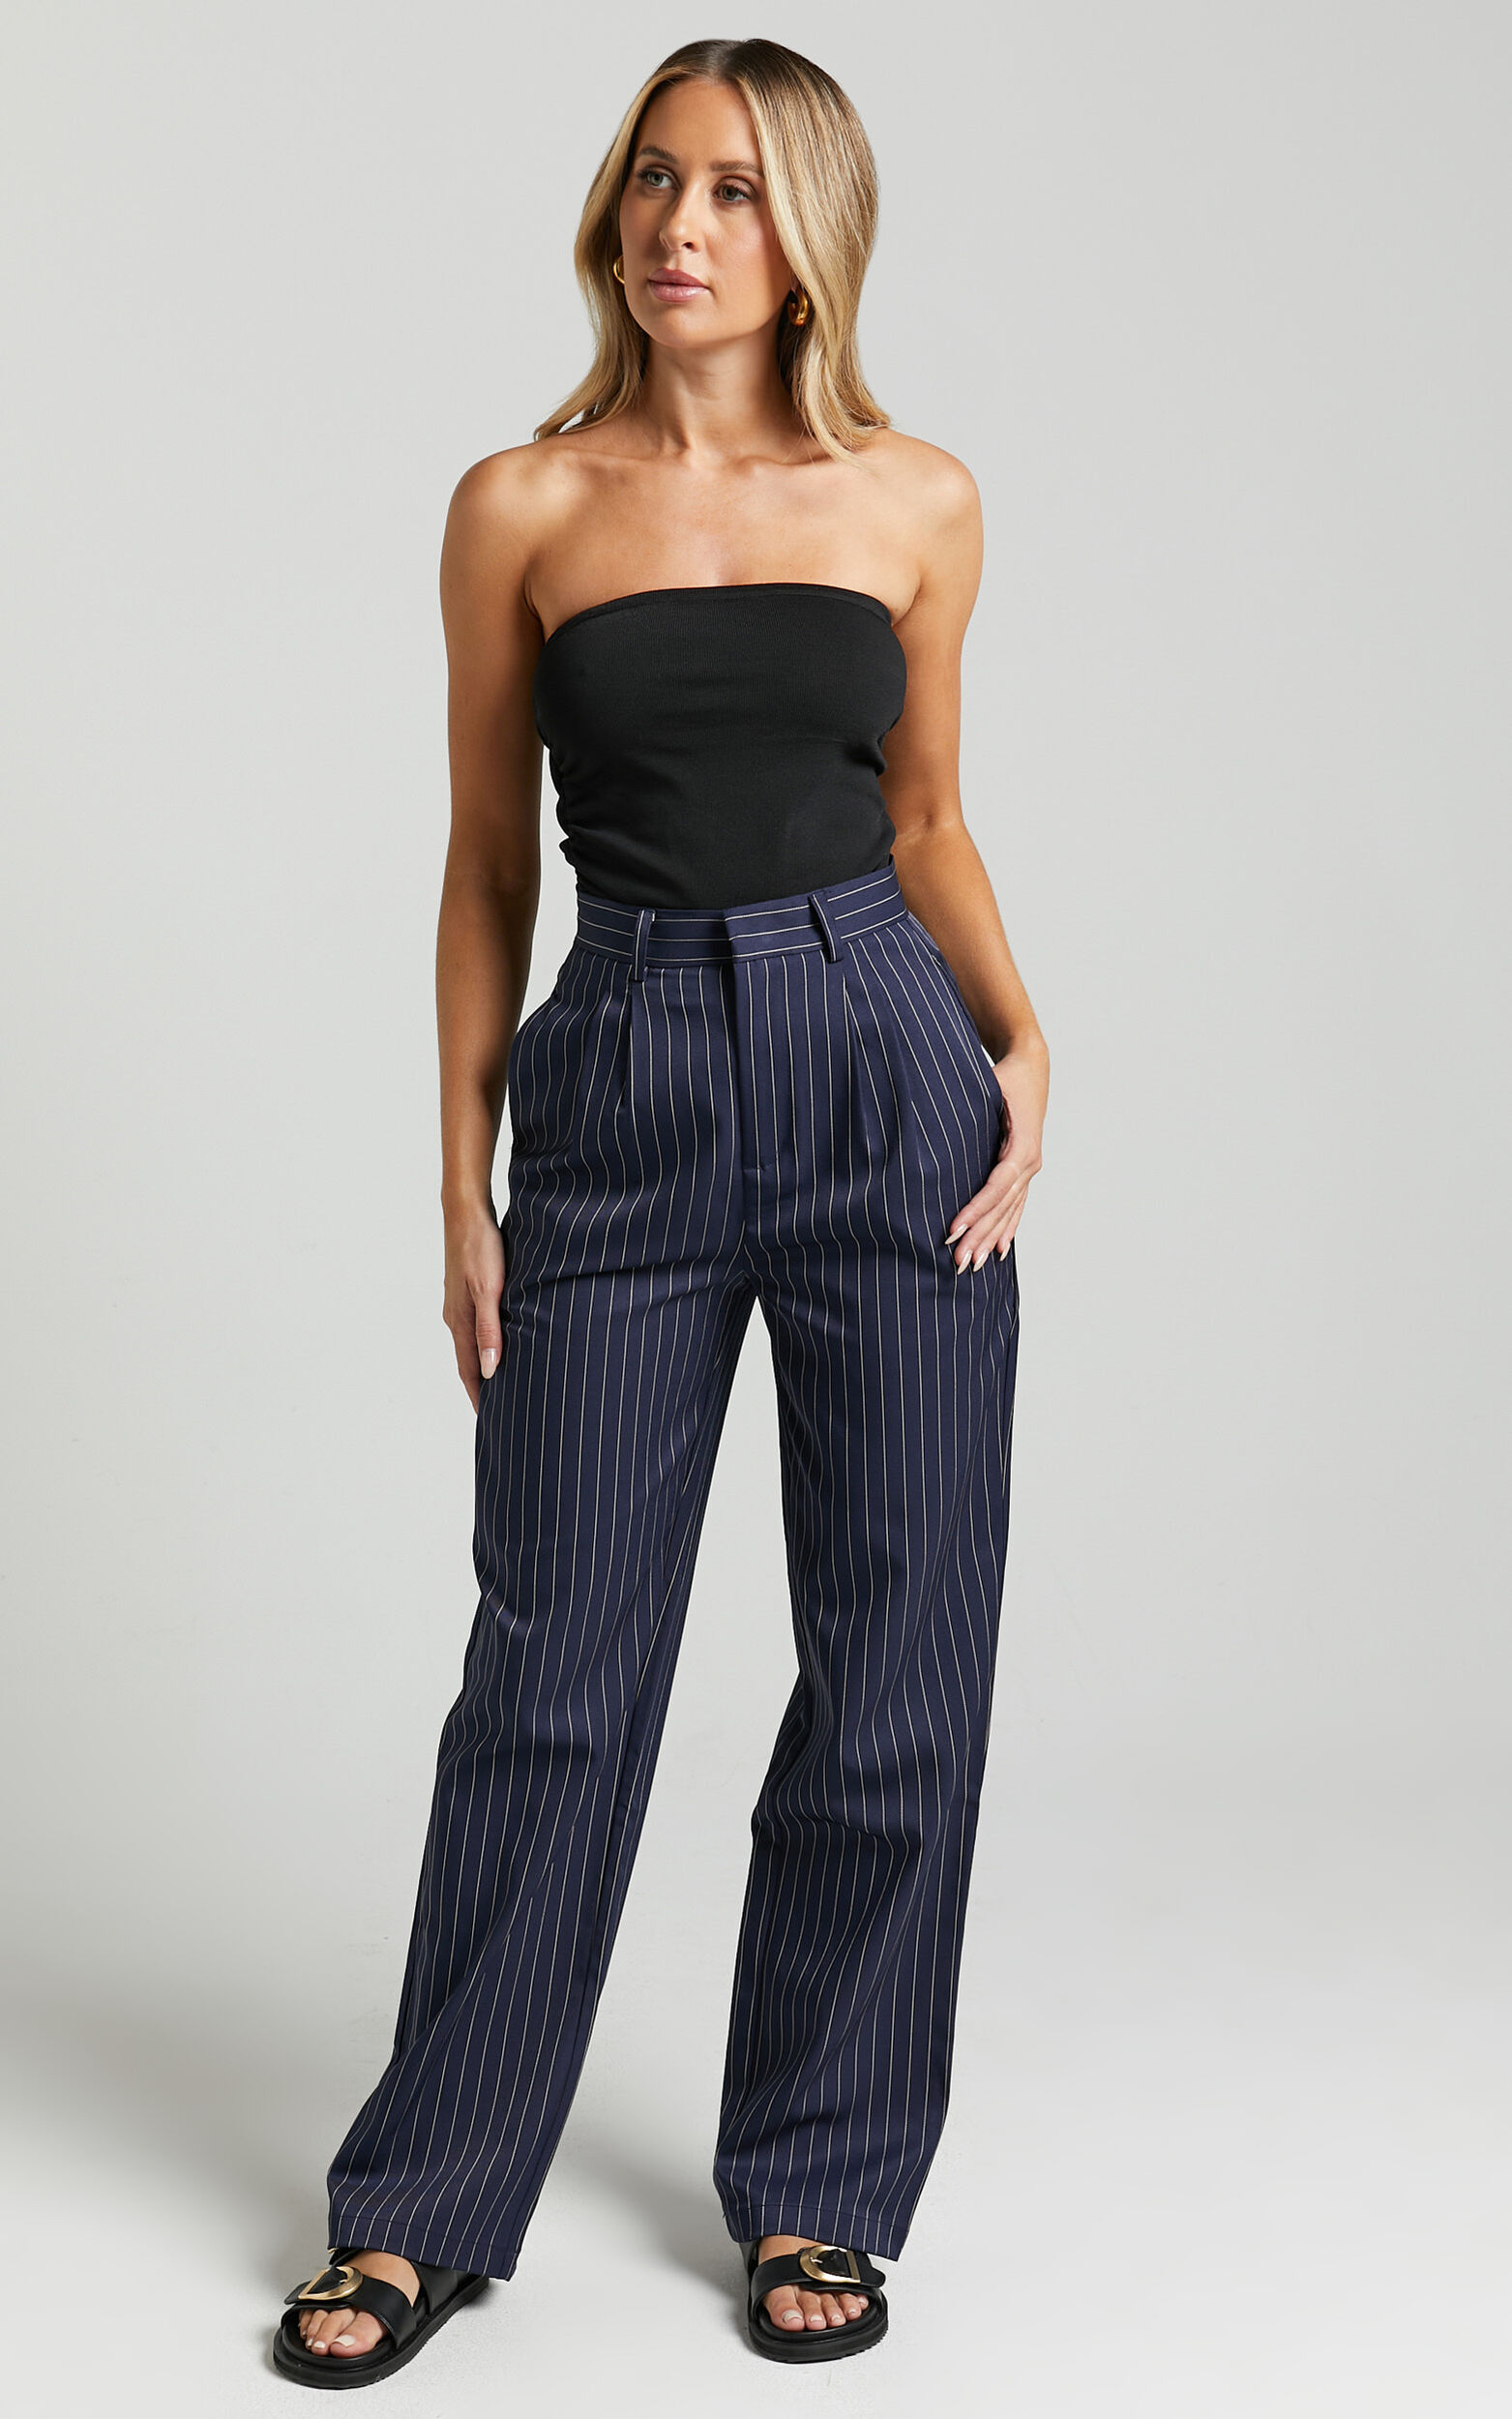 Aim'n - Aim'n Grey Stripe High Waist Tights - Size S - Brand New on  Designer Wardrobe